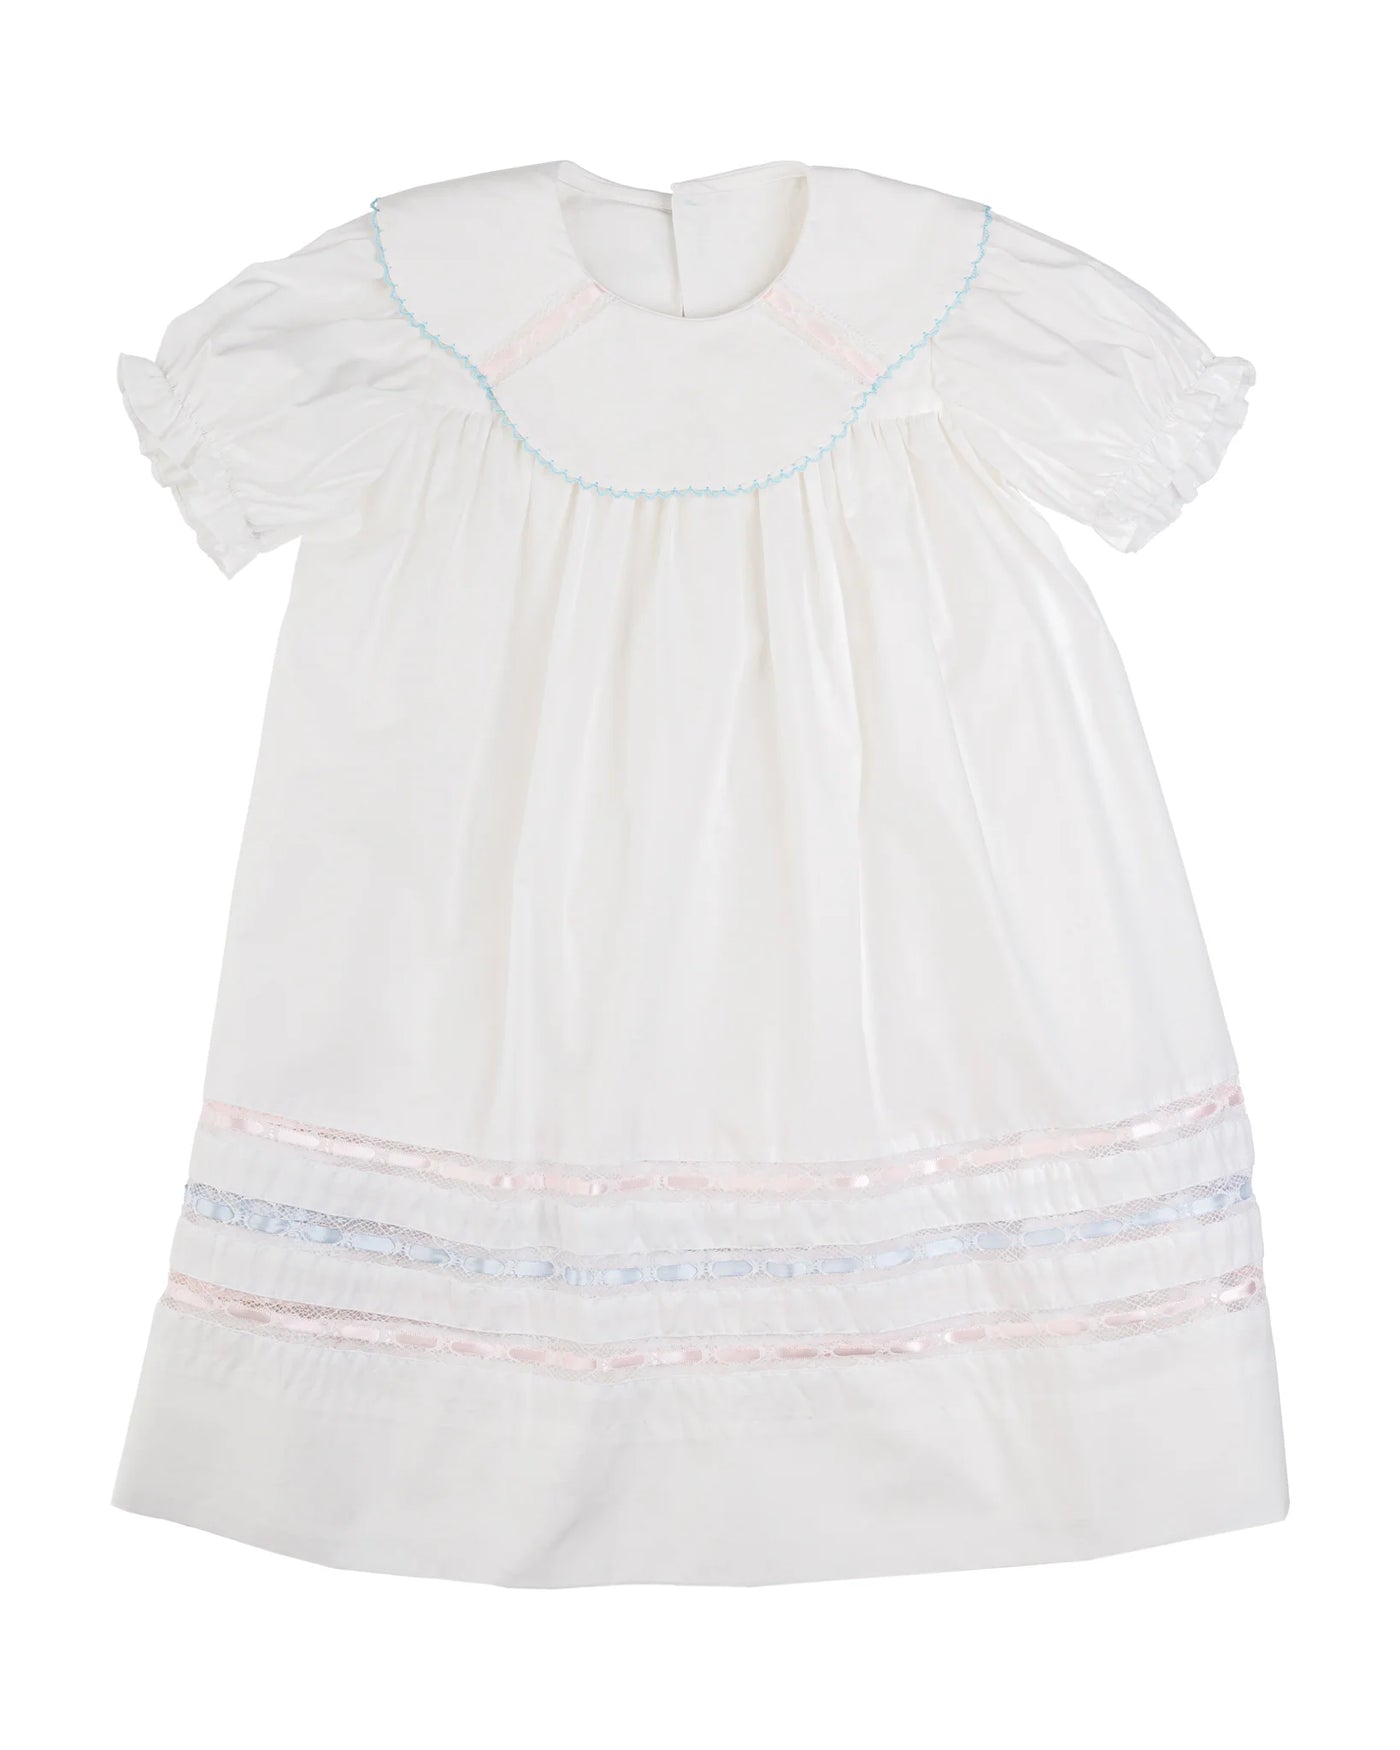 Donahue Dress - Blessings White Batiste Blue/Pink Ribbon